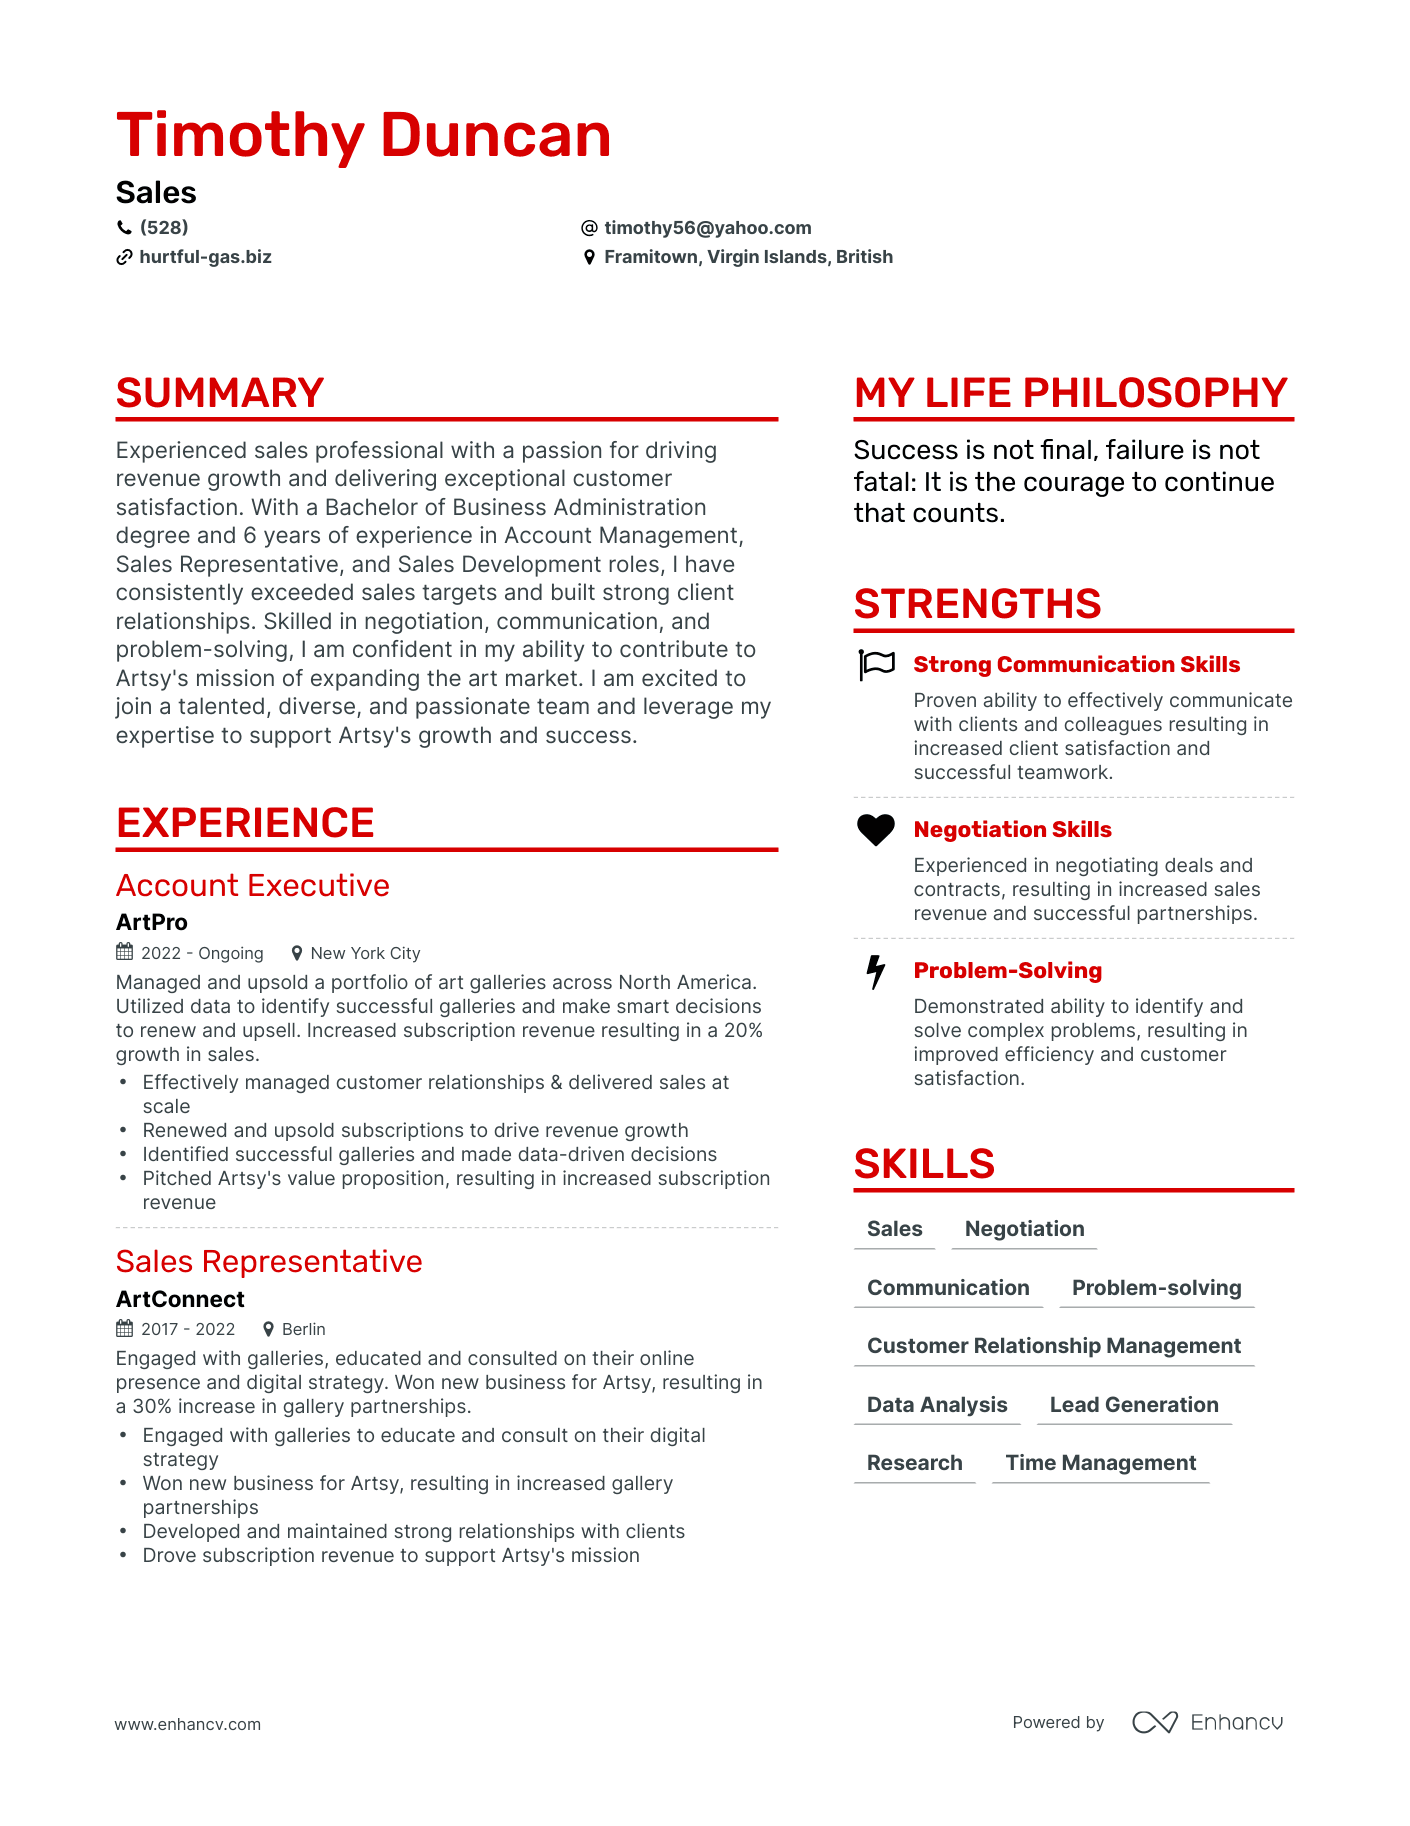 Sales resume example